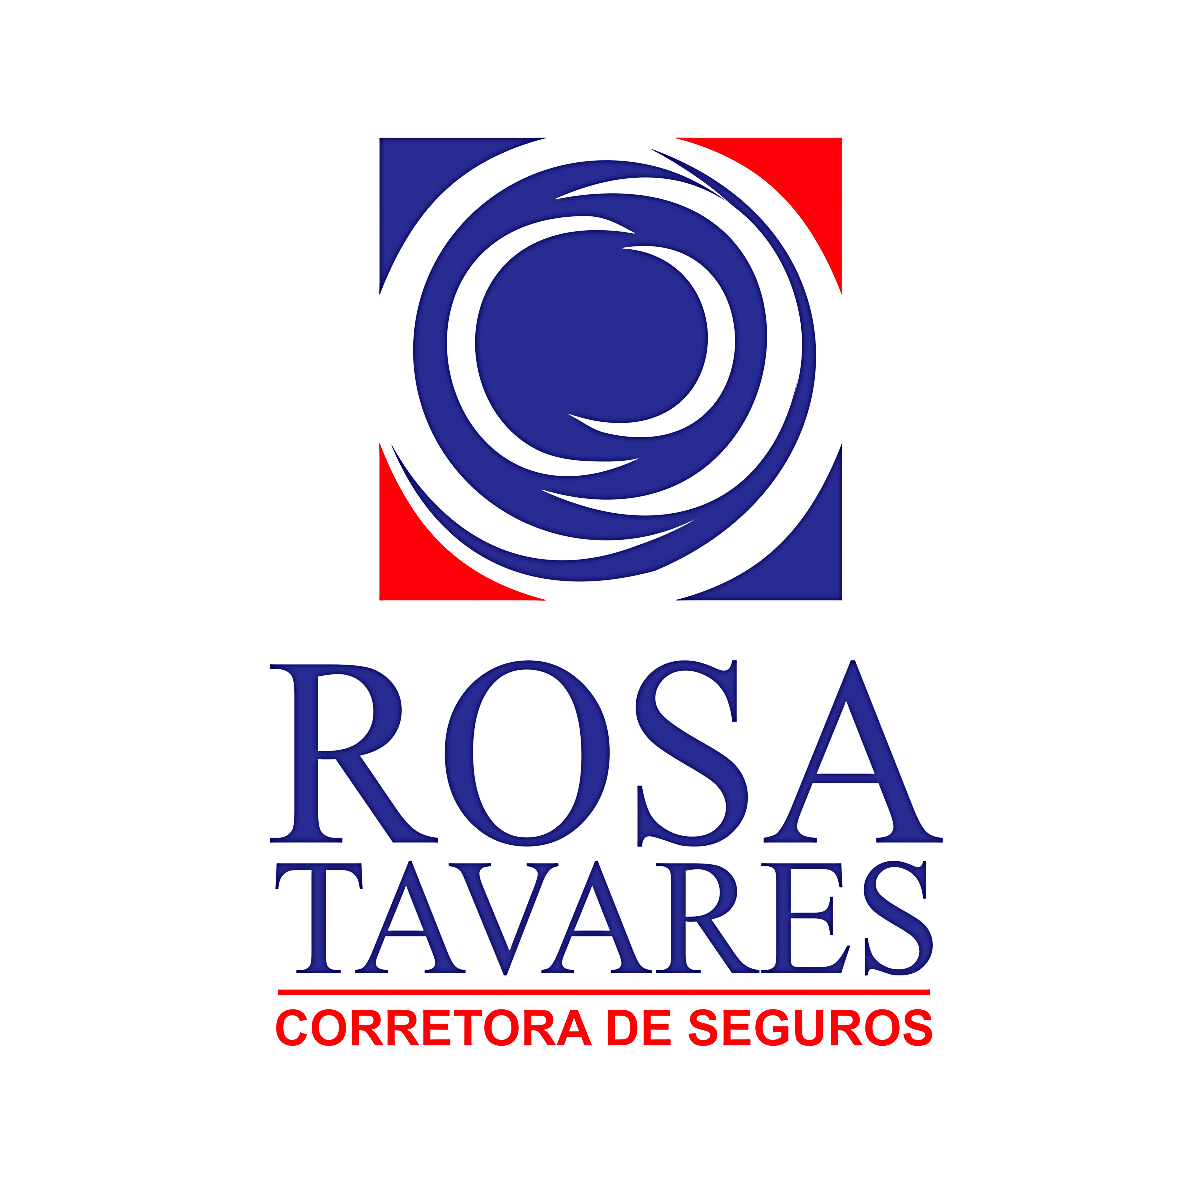 ROSA TAVARES